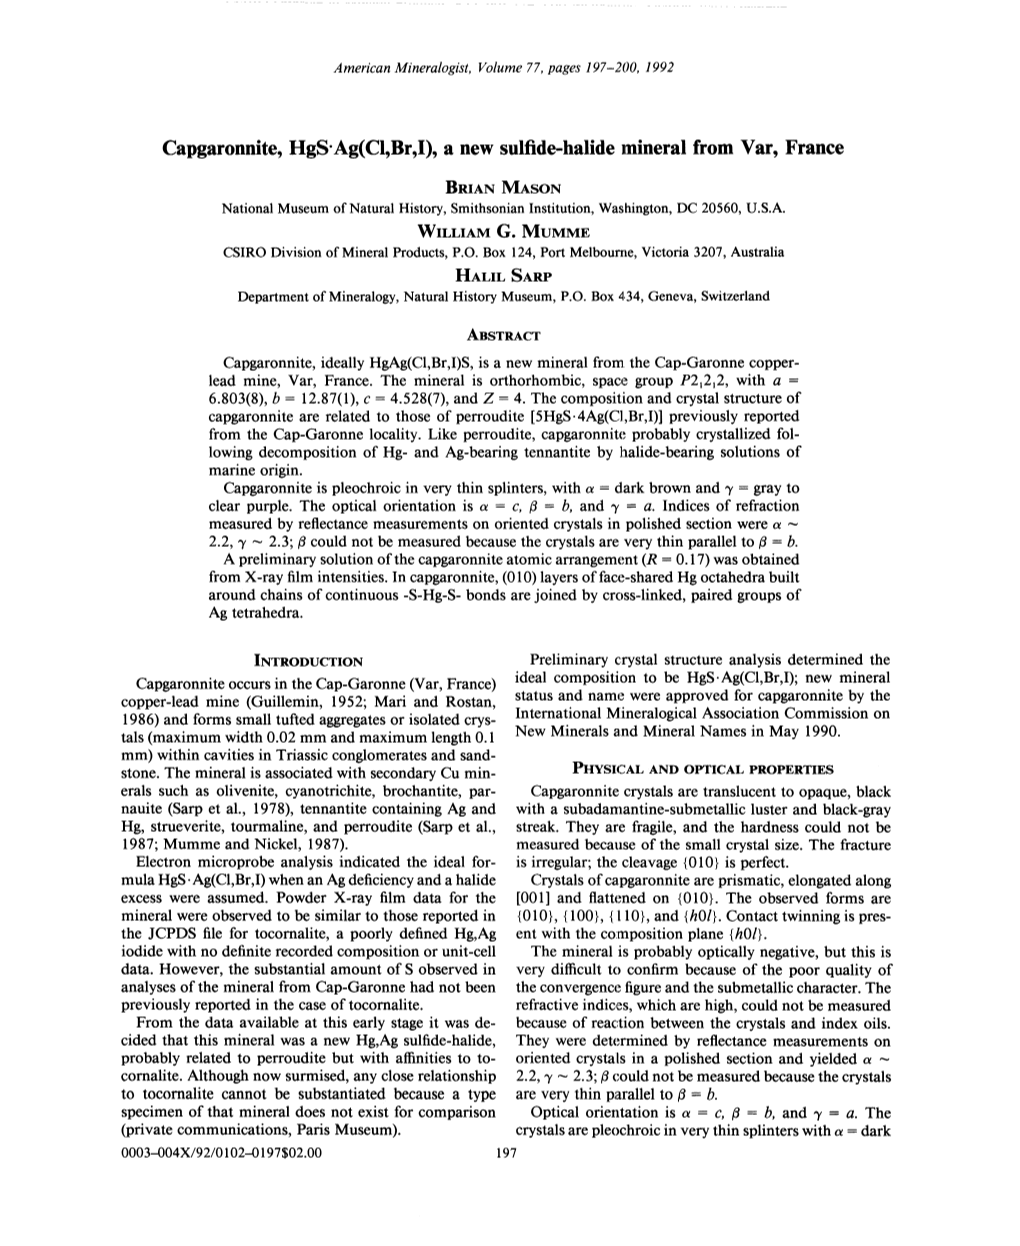 Capgaronnite, Hgs. Ag(CI,Br ,1), a New Sulfide-Halide ]Ti1ineralfrom